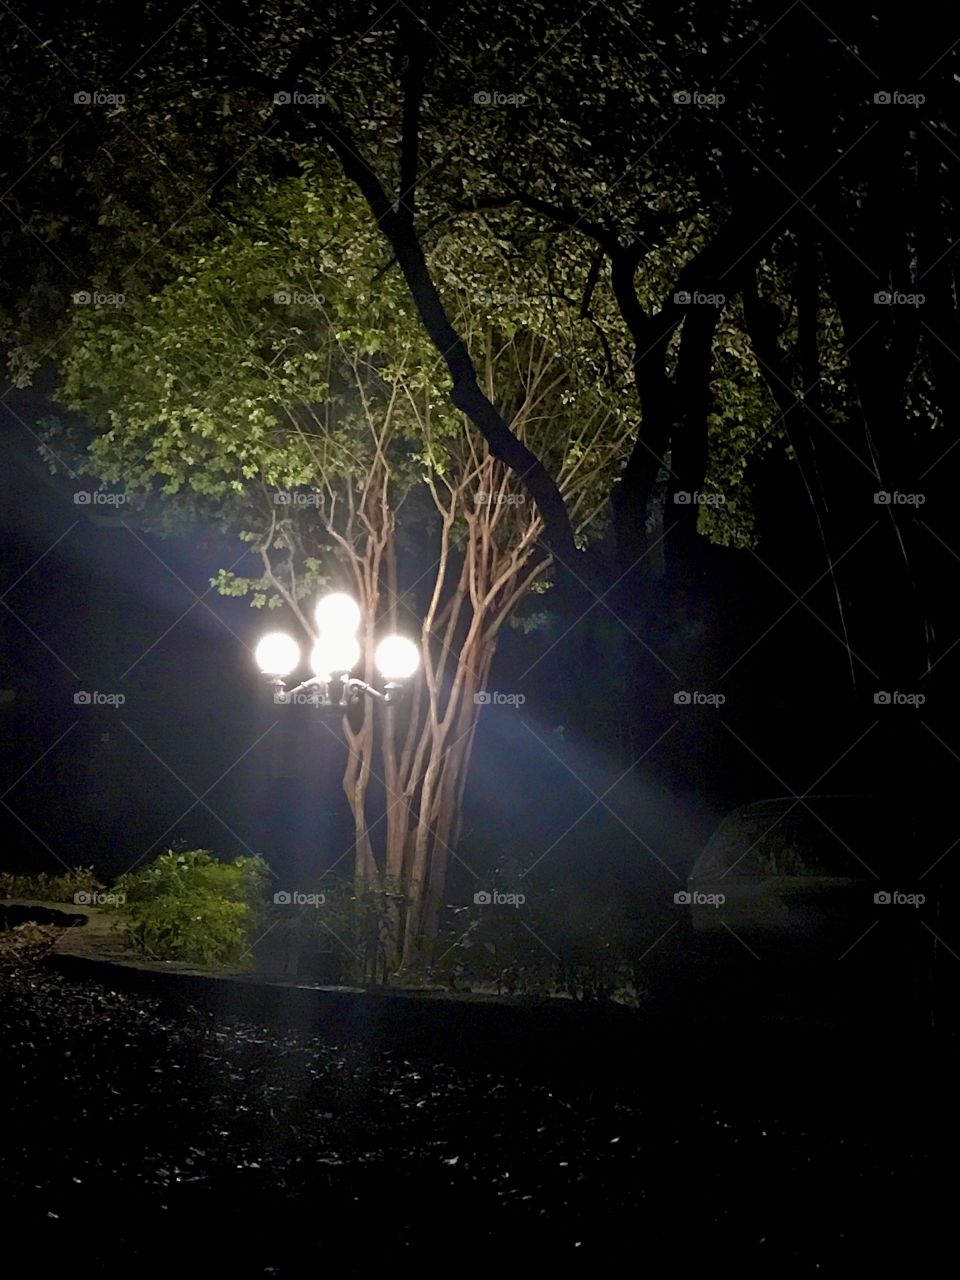 Lights at night exposing shadows and tree limbs.